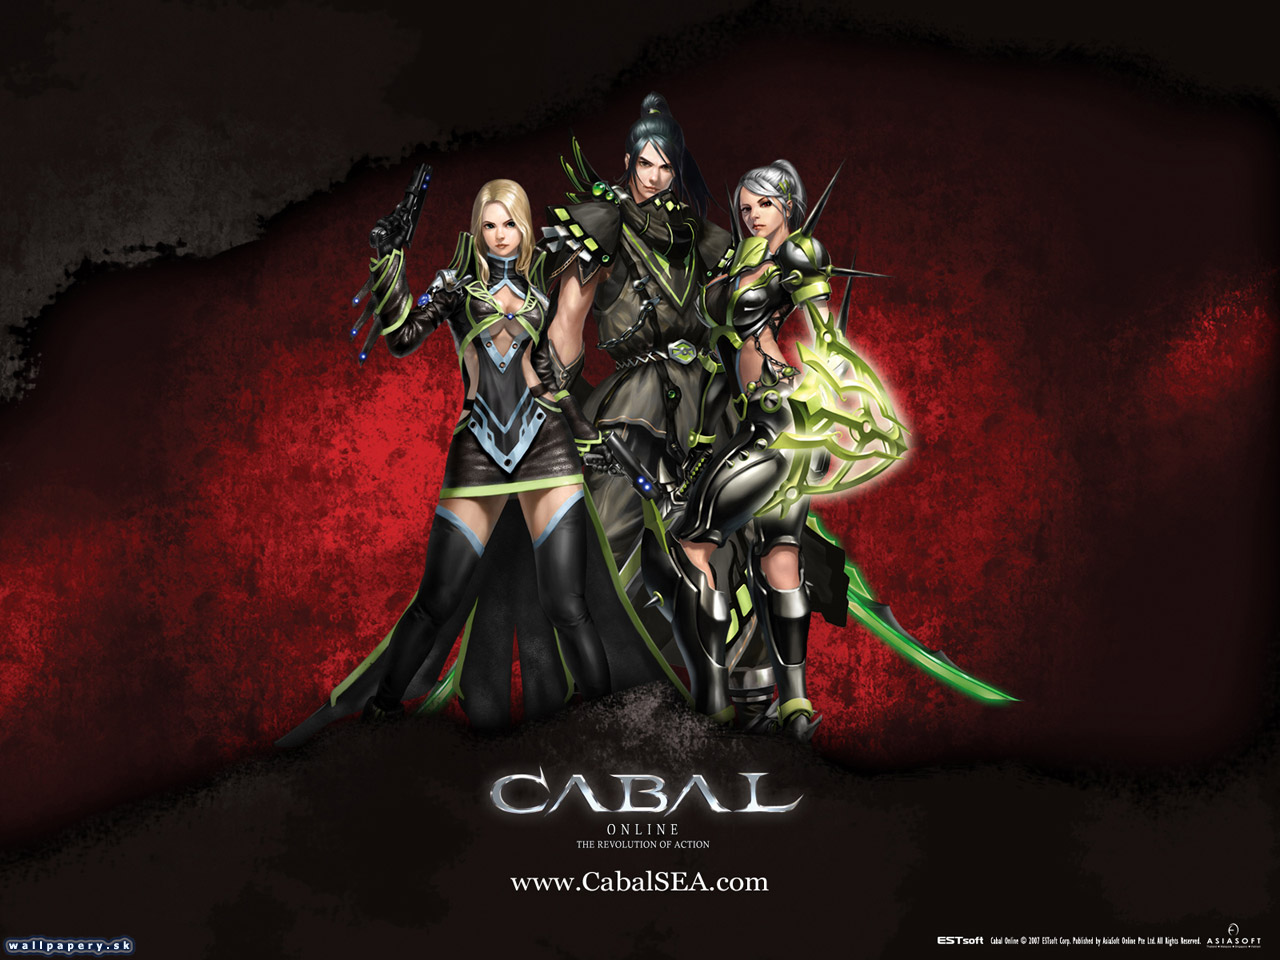 CABAL Online: The Revolution of Action - wallpaper 2